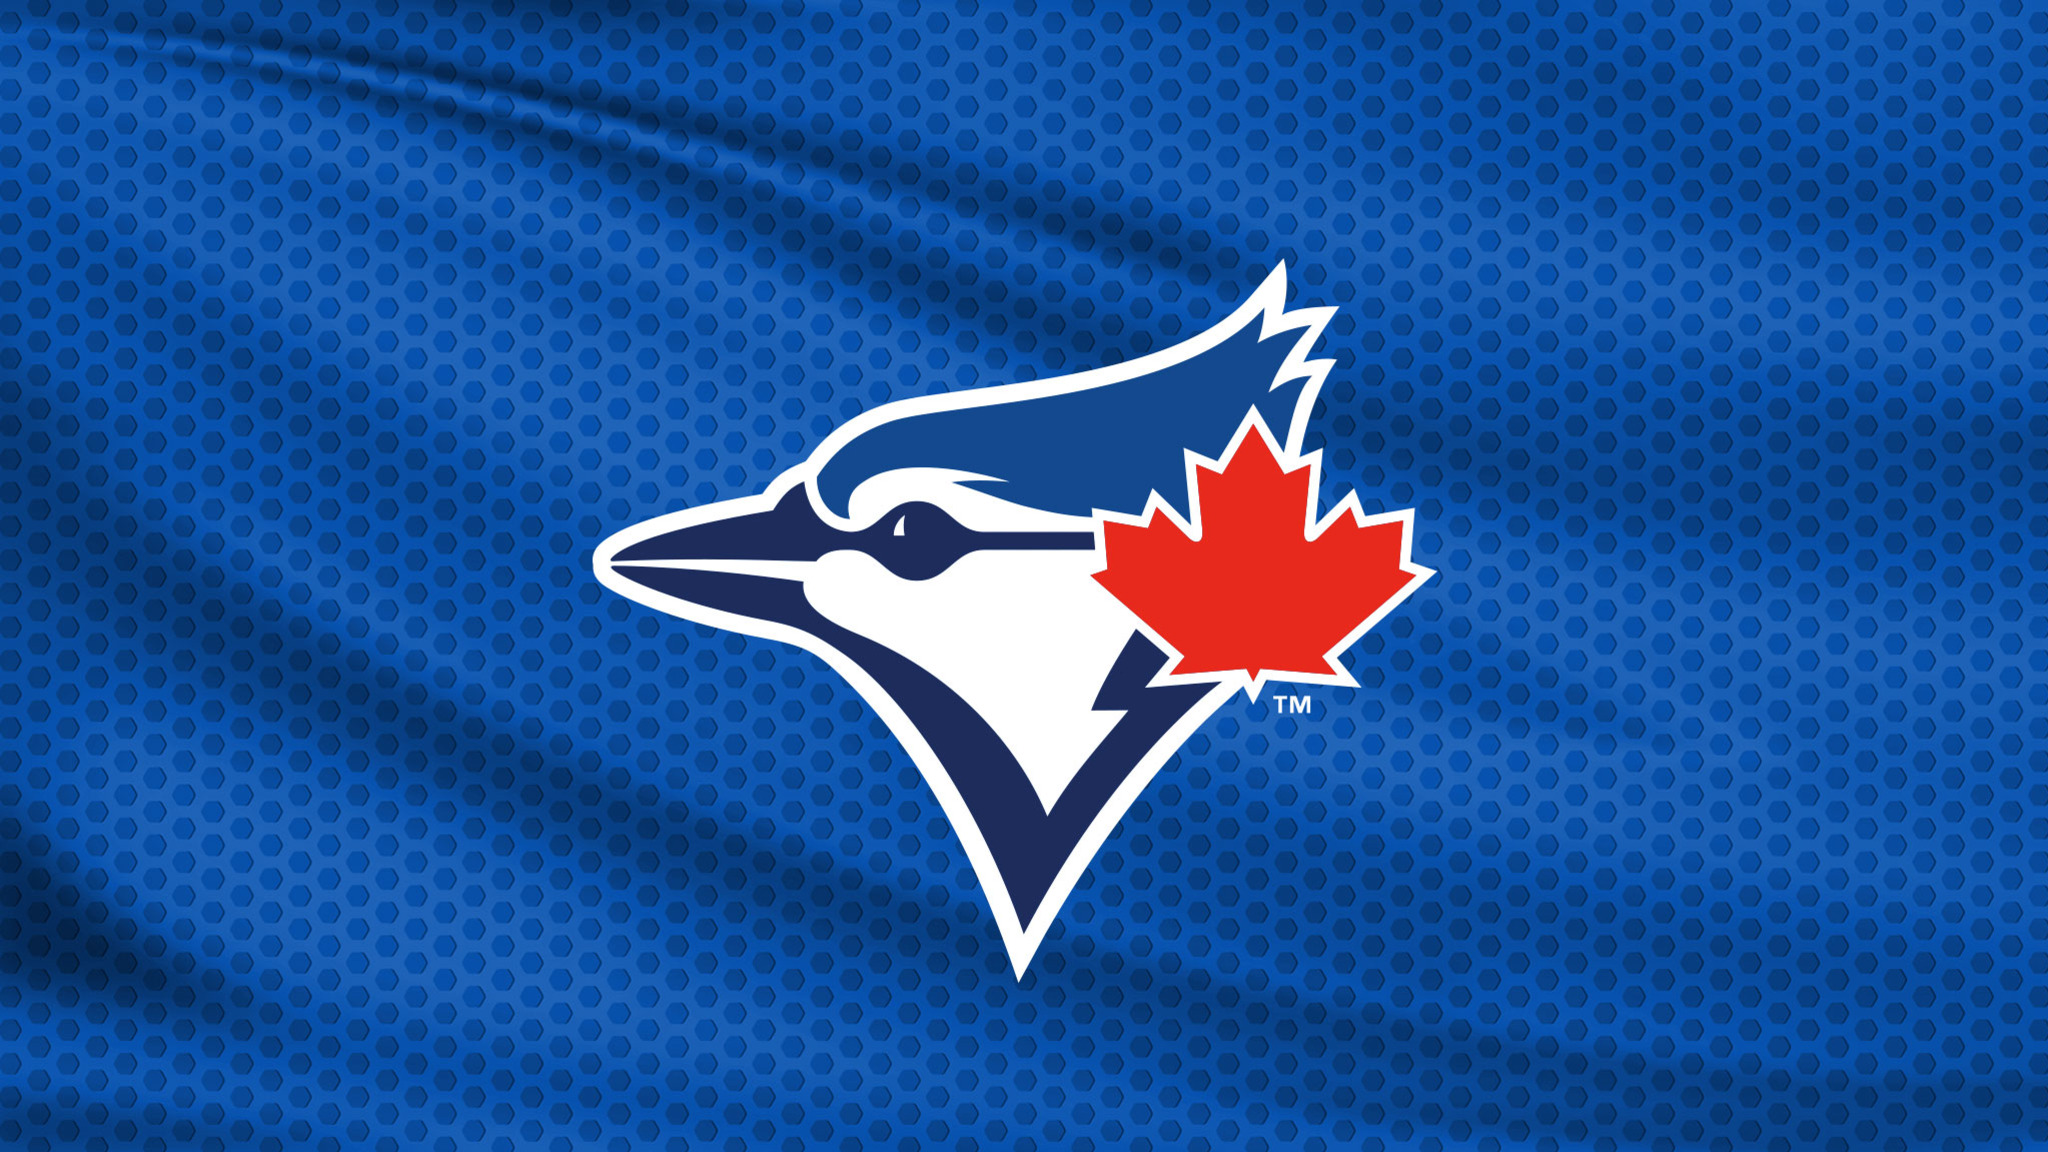 Toronto Blue Jays added a new photo. - Toronto Blue Jays